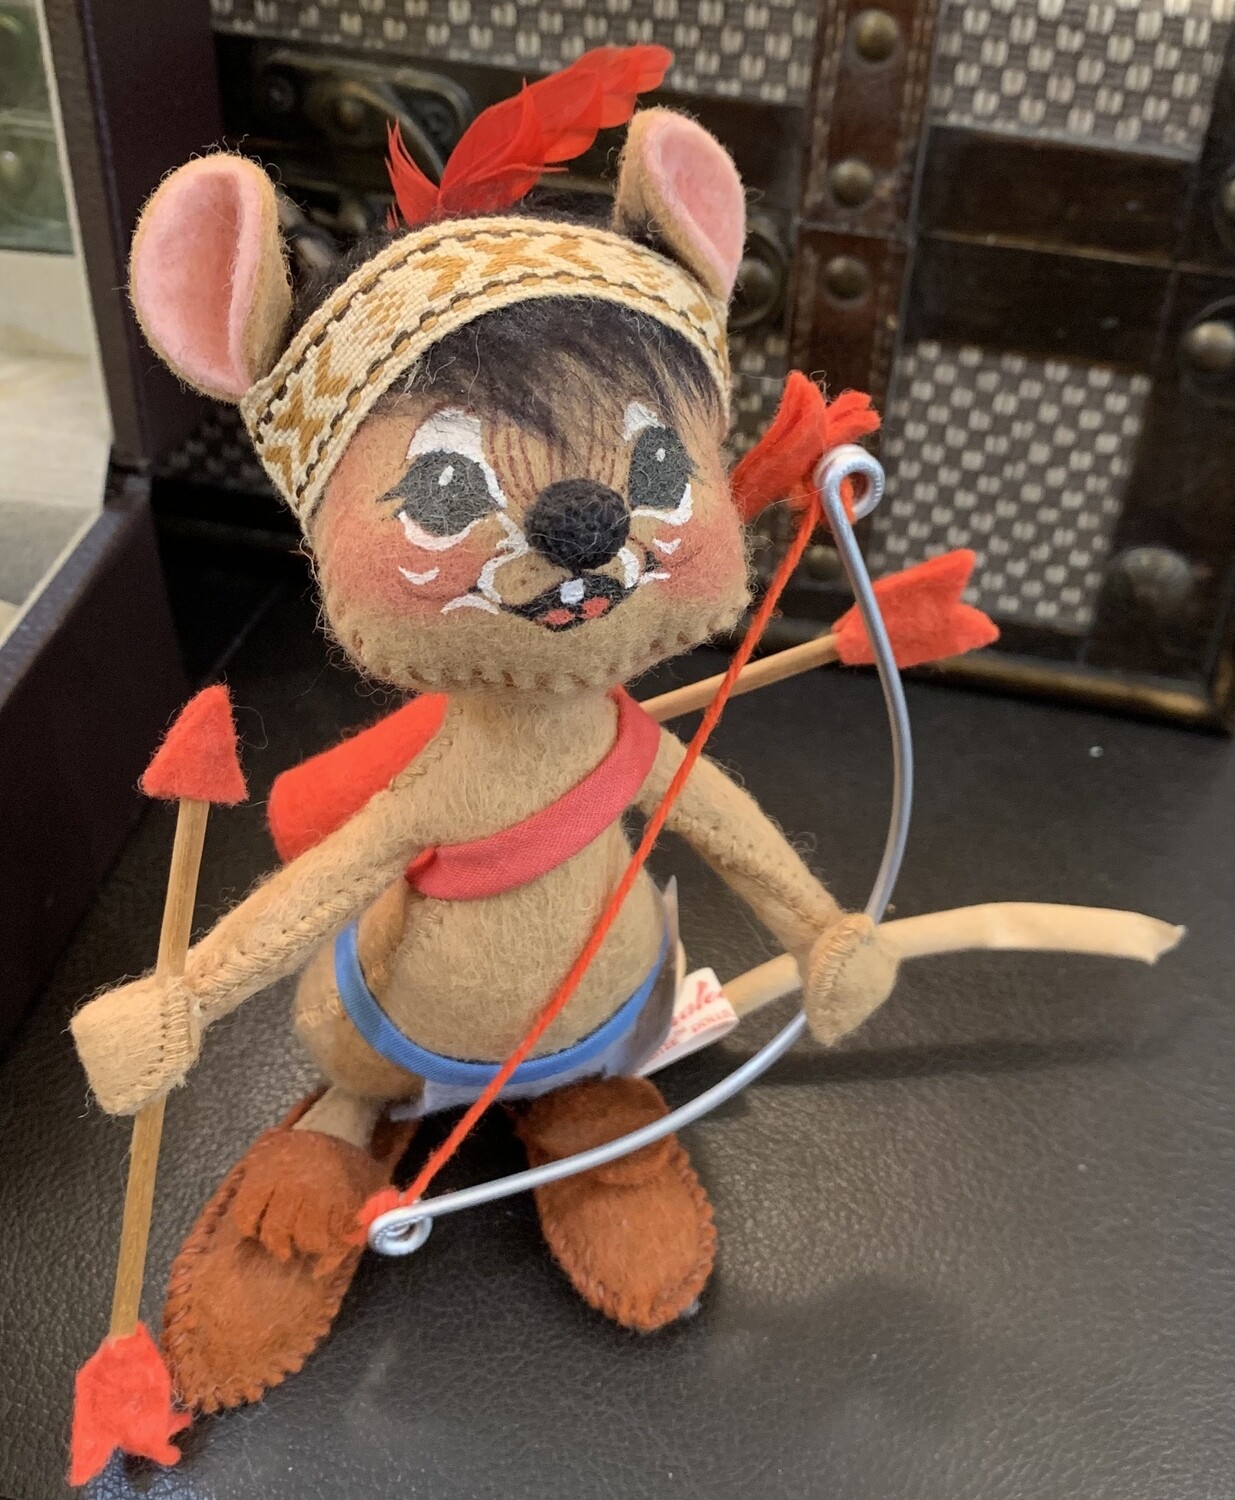 6” Archery Mouse Doll